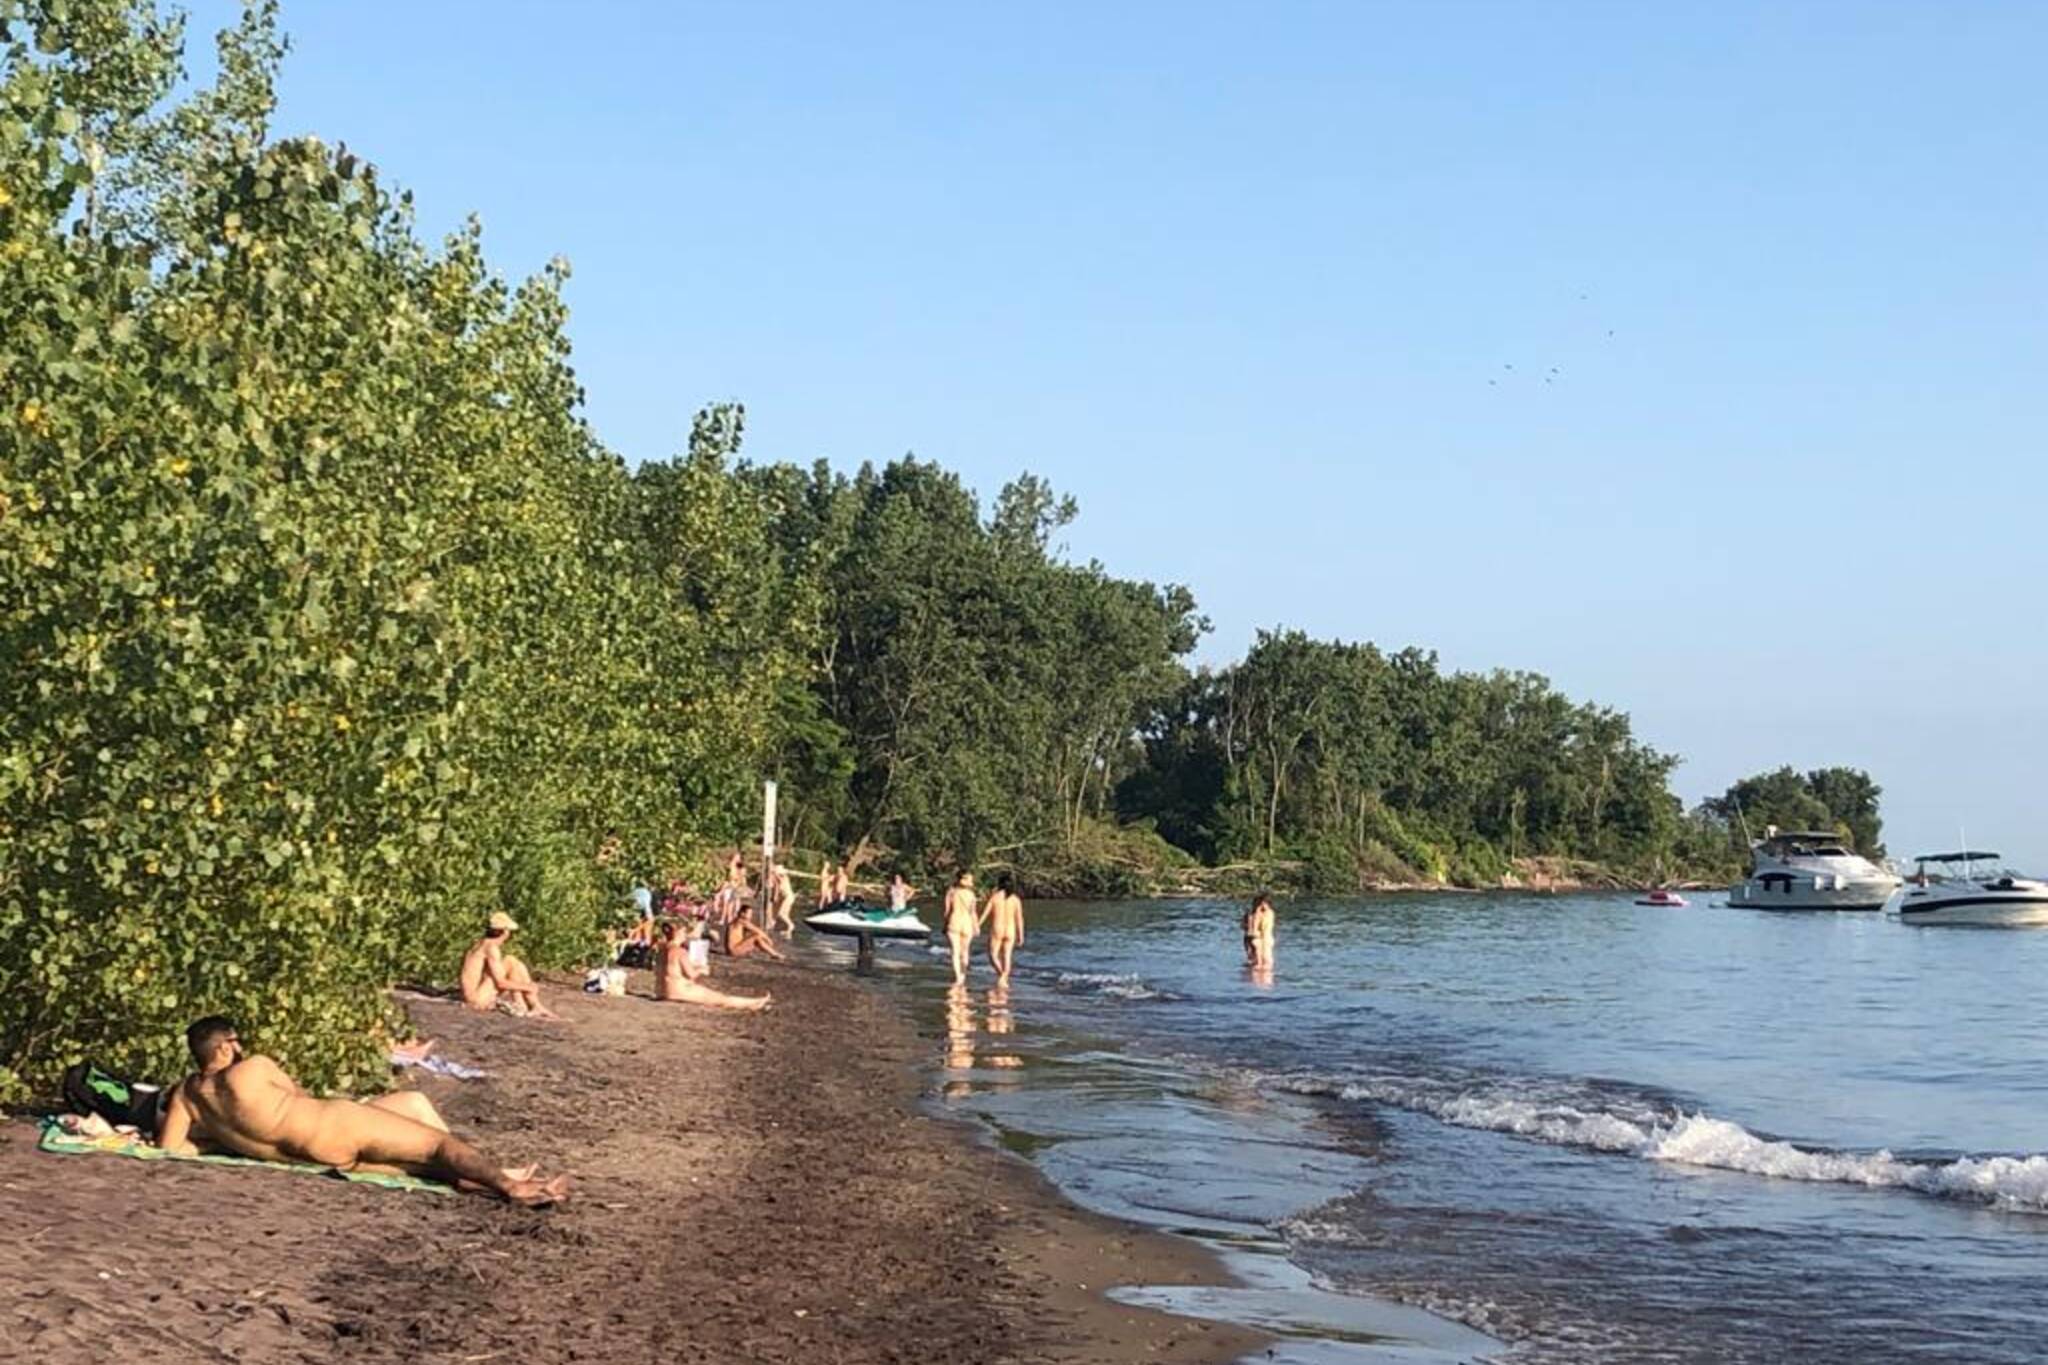 Nude Nudist Naturist - Hanlan's Point is the Toronto Island's famous nude beach